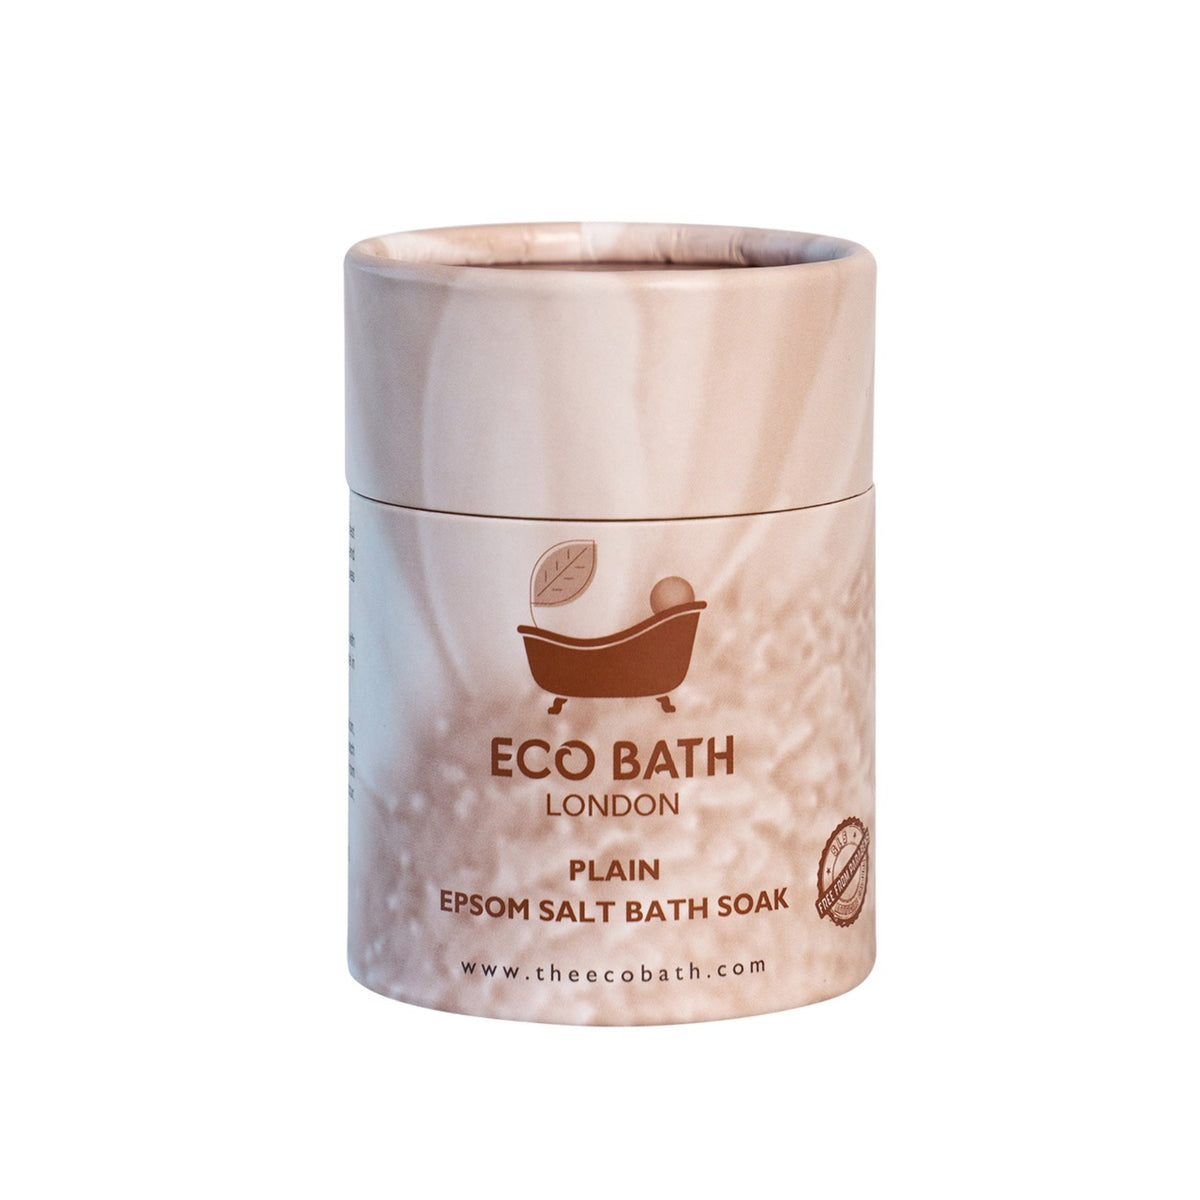 Eco Bath Plain Epsom Salt Bath Soak - Tube